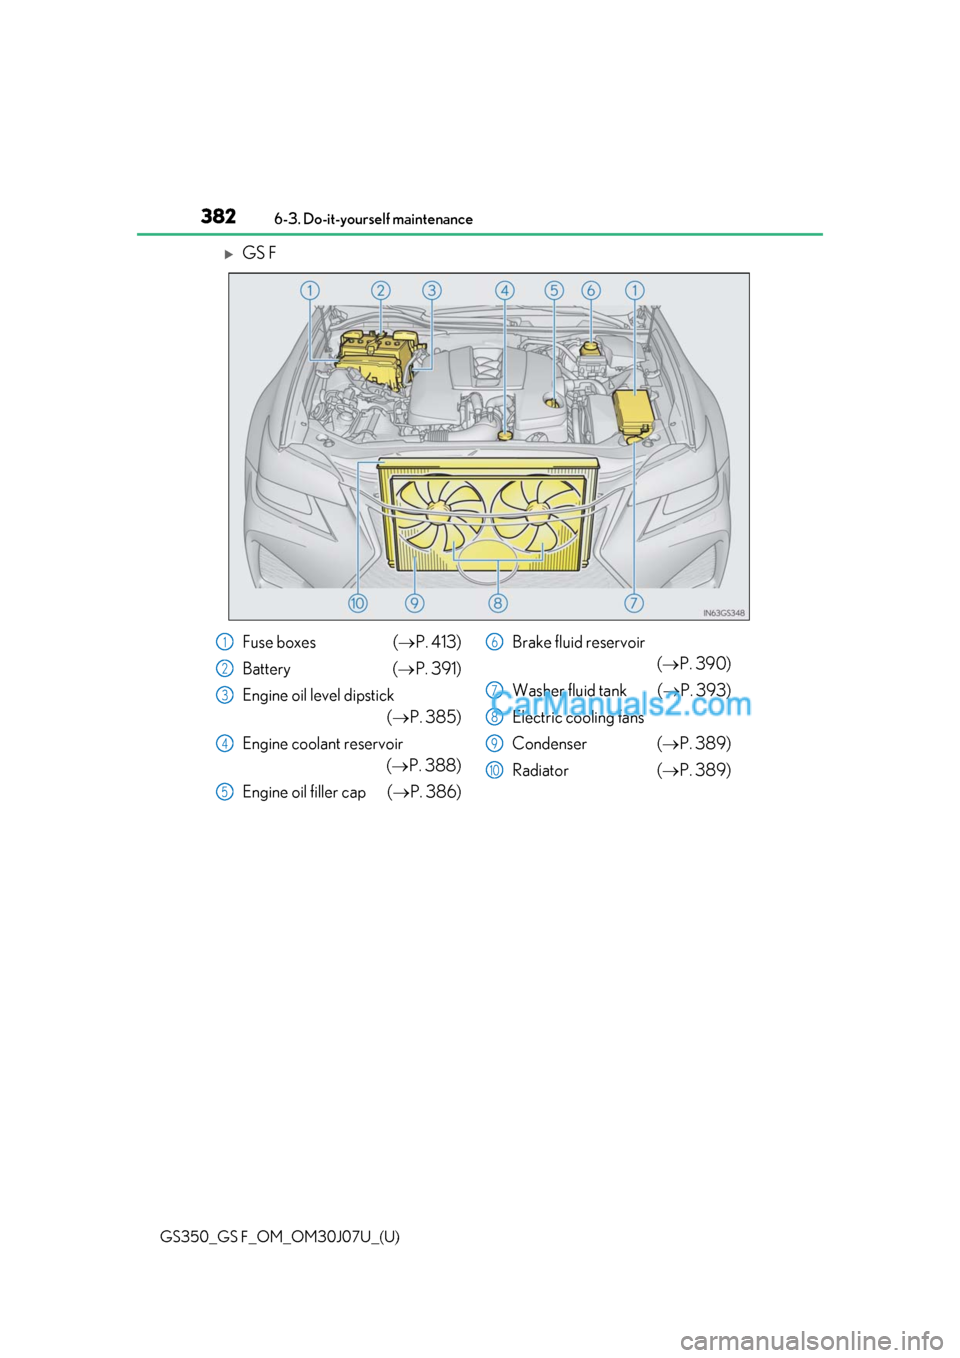 Lexus GS F 2020  Owners Manuals 382
GS350_GS F_OM_OM30J07U_(U)6-3. Do-it-yourself maintenance
GS F
Fuse boxes (
P. 413)
Battery ( P. 391)
Engine oil level dipstick (P. 385)
Engine coolant reservoir (P. 388)
Engine oil